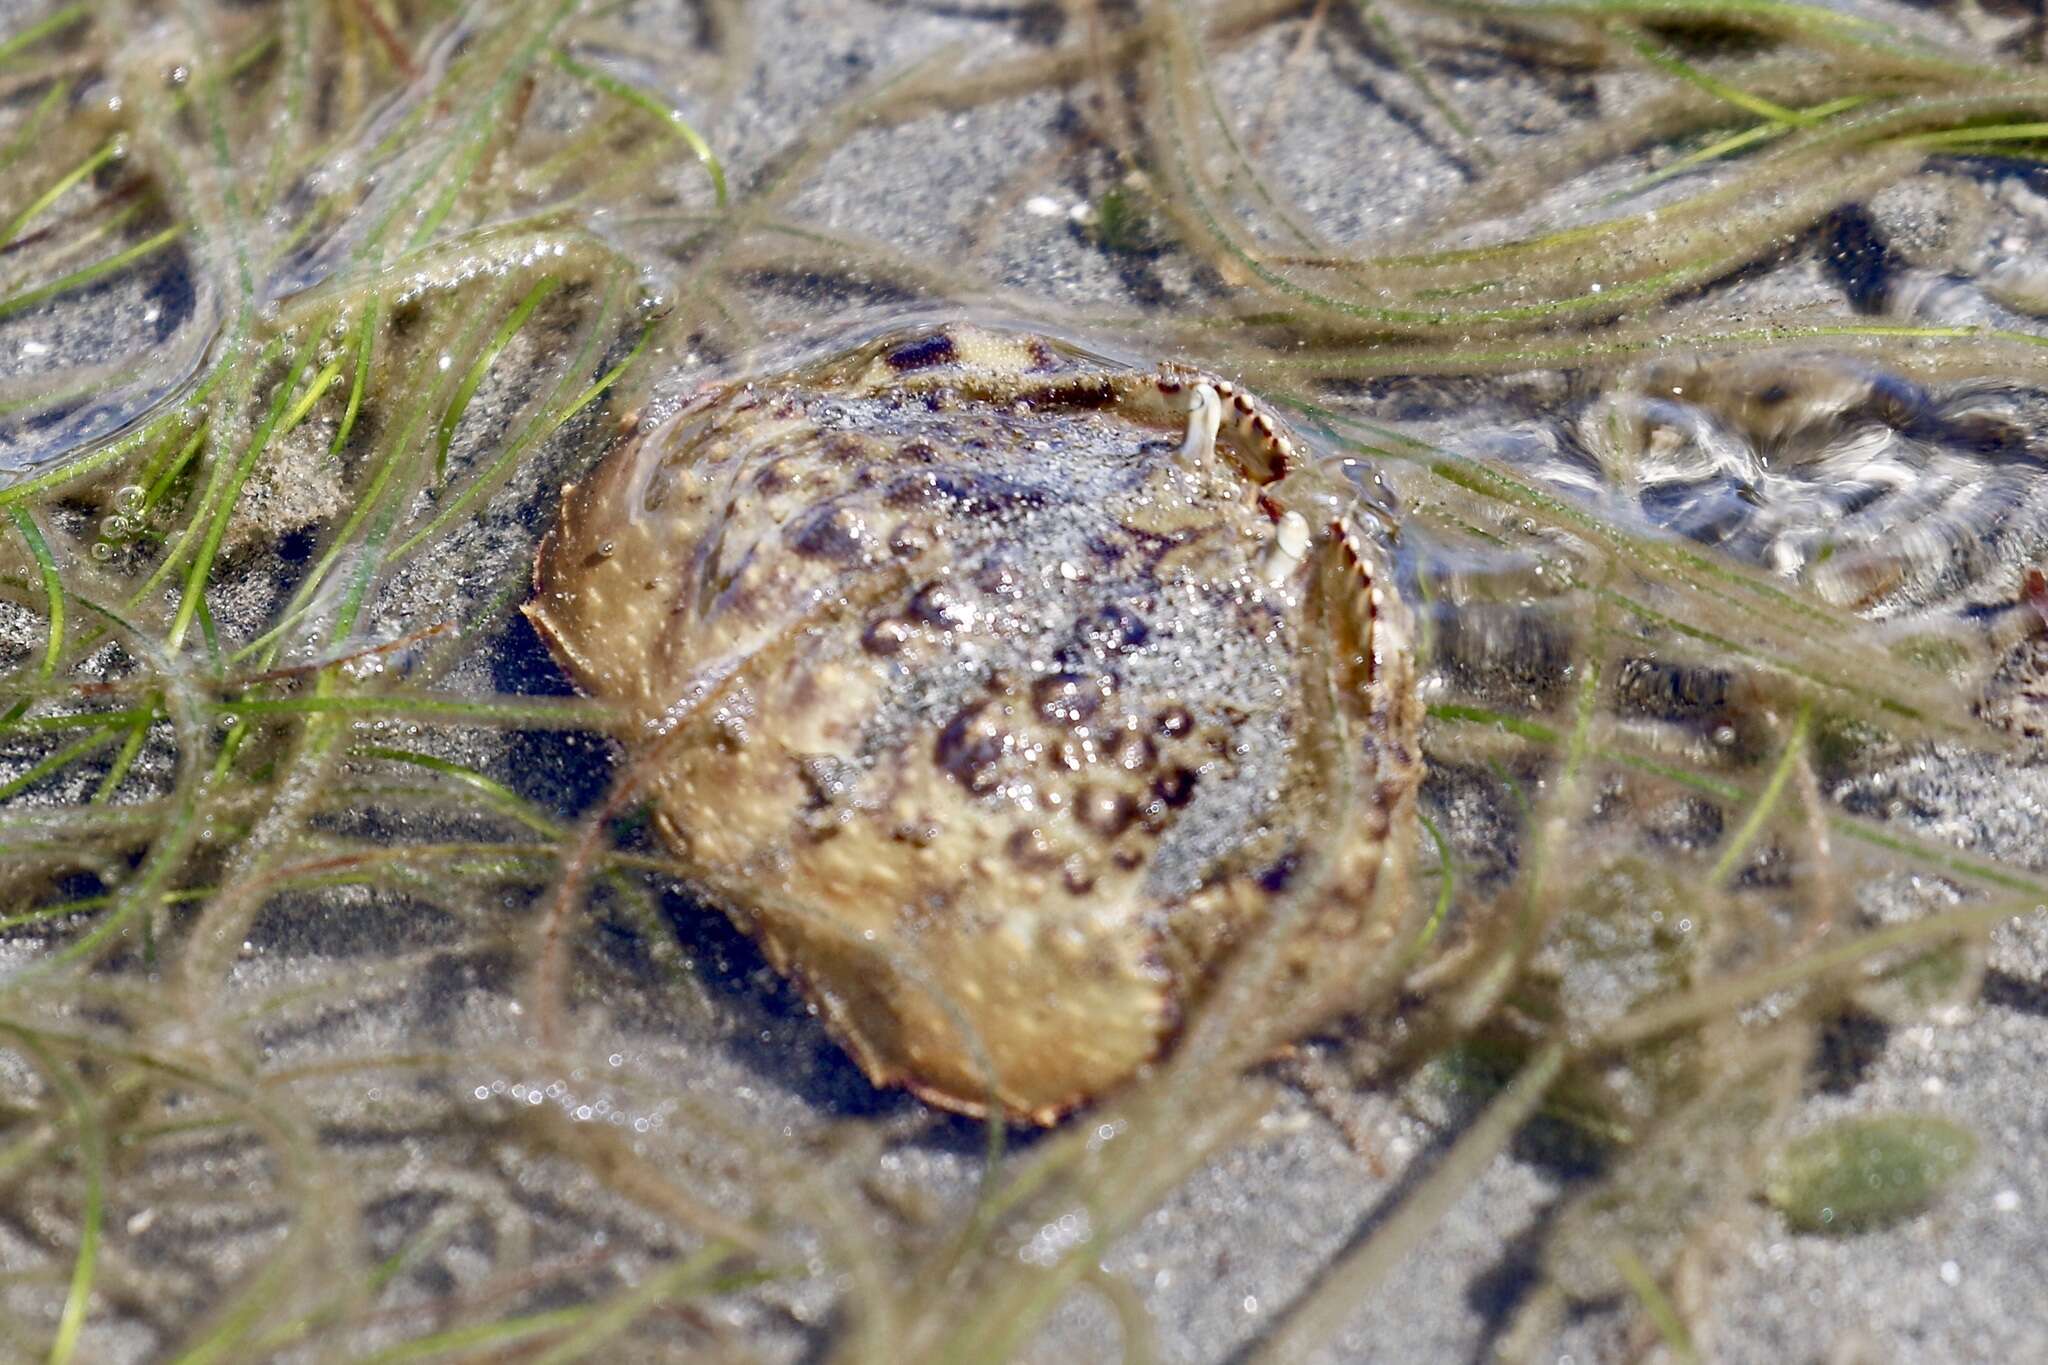 Image of smooth box crab